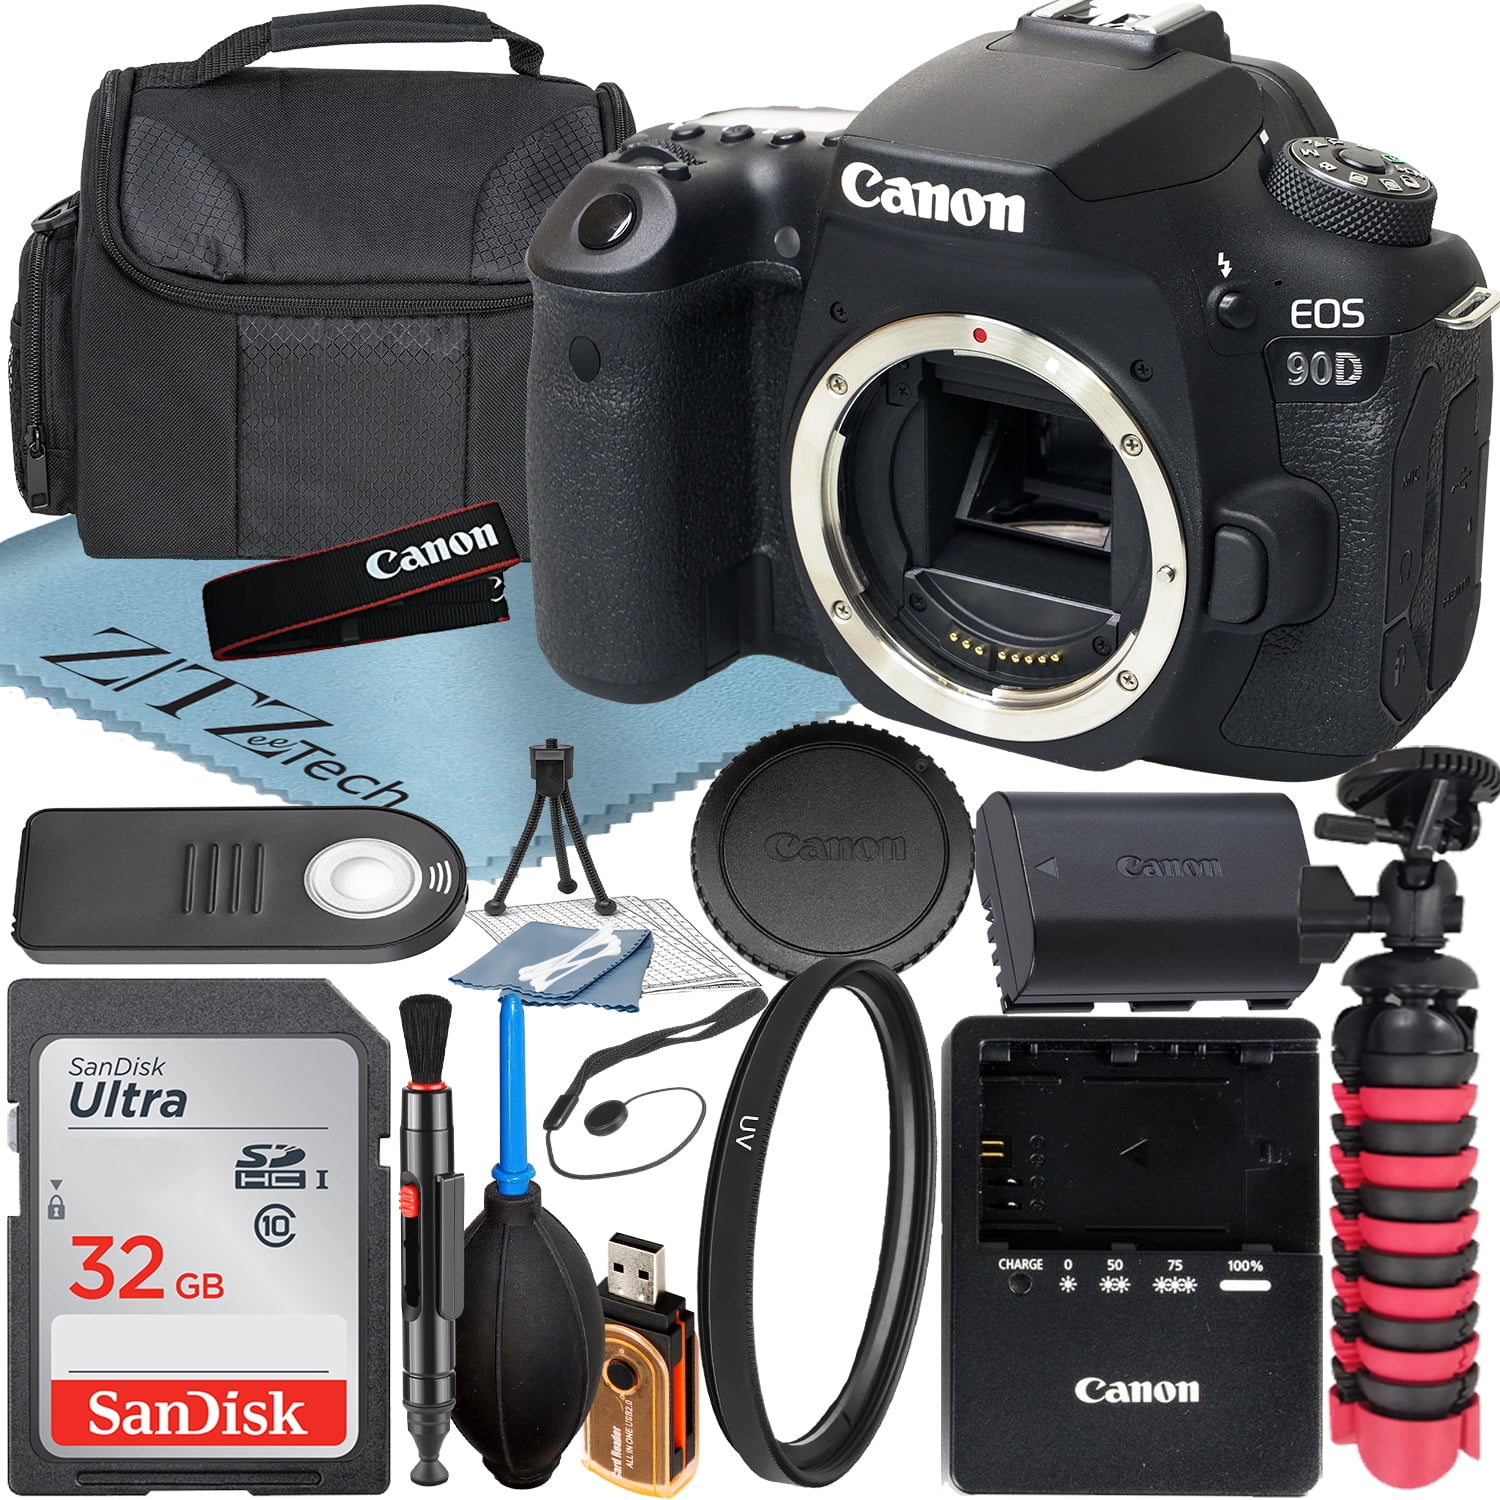 Canon EOS 90D DSLR Camera with PC Free Accessory Bundle 3616C002 A